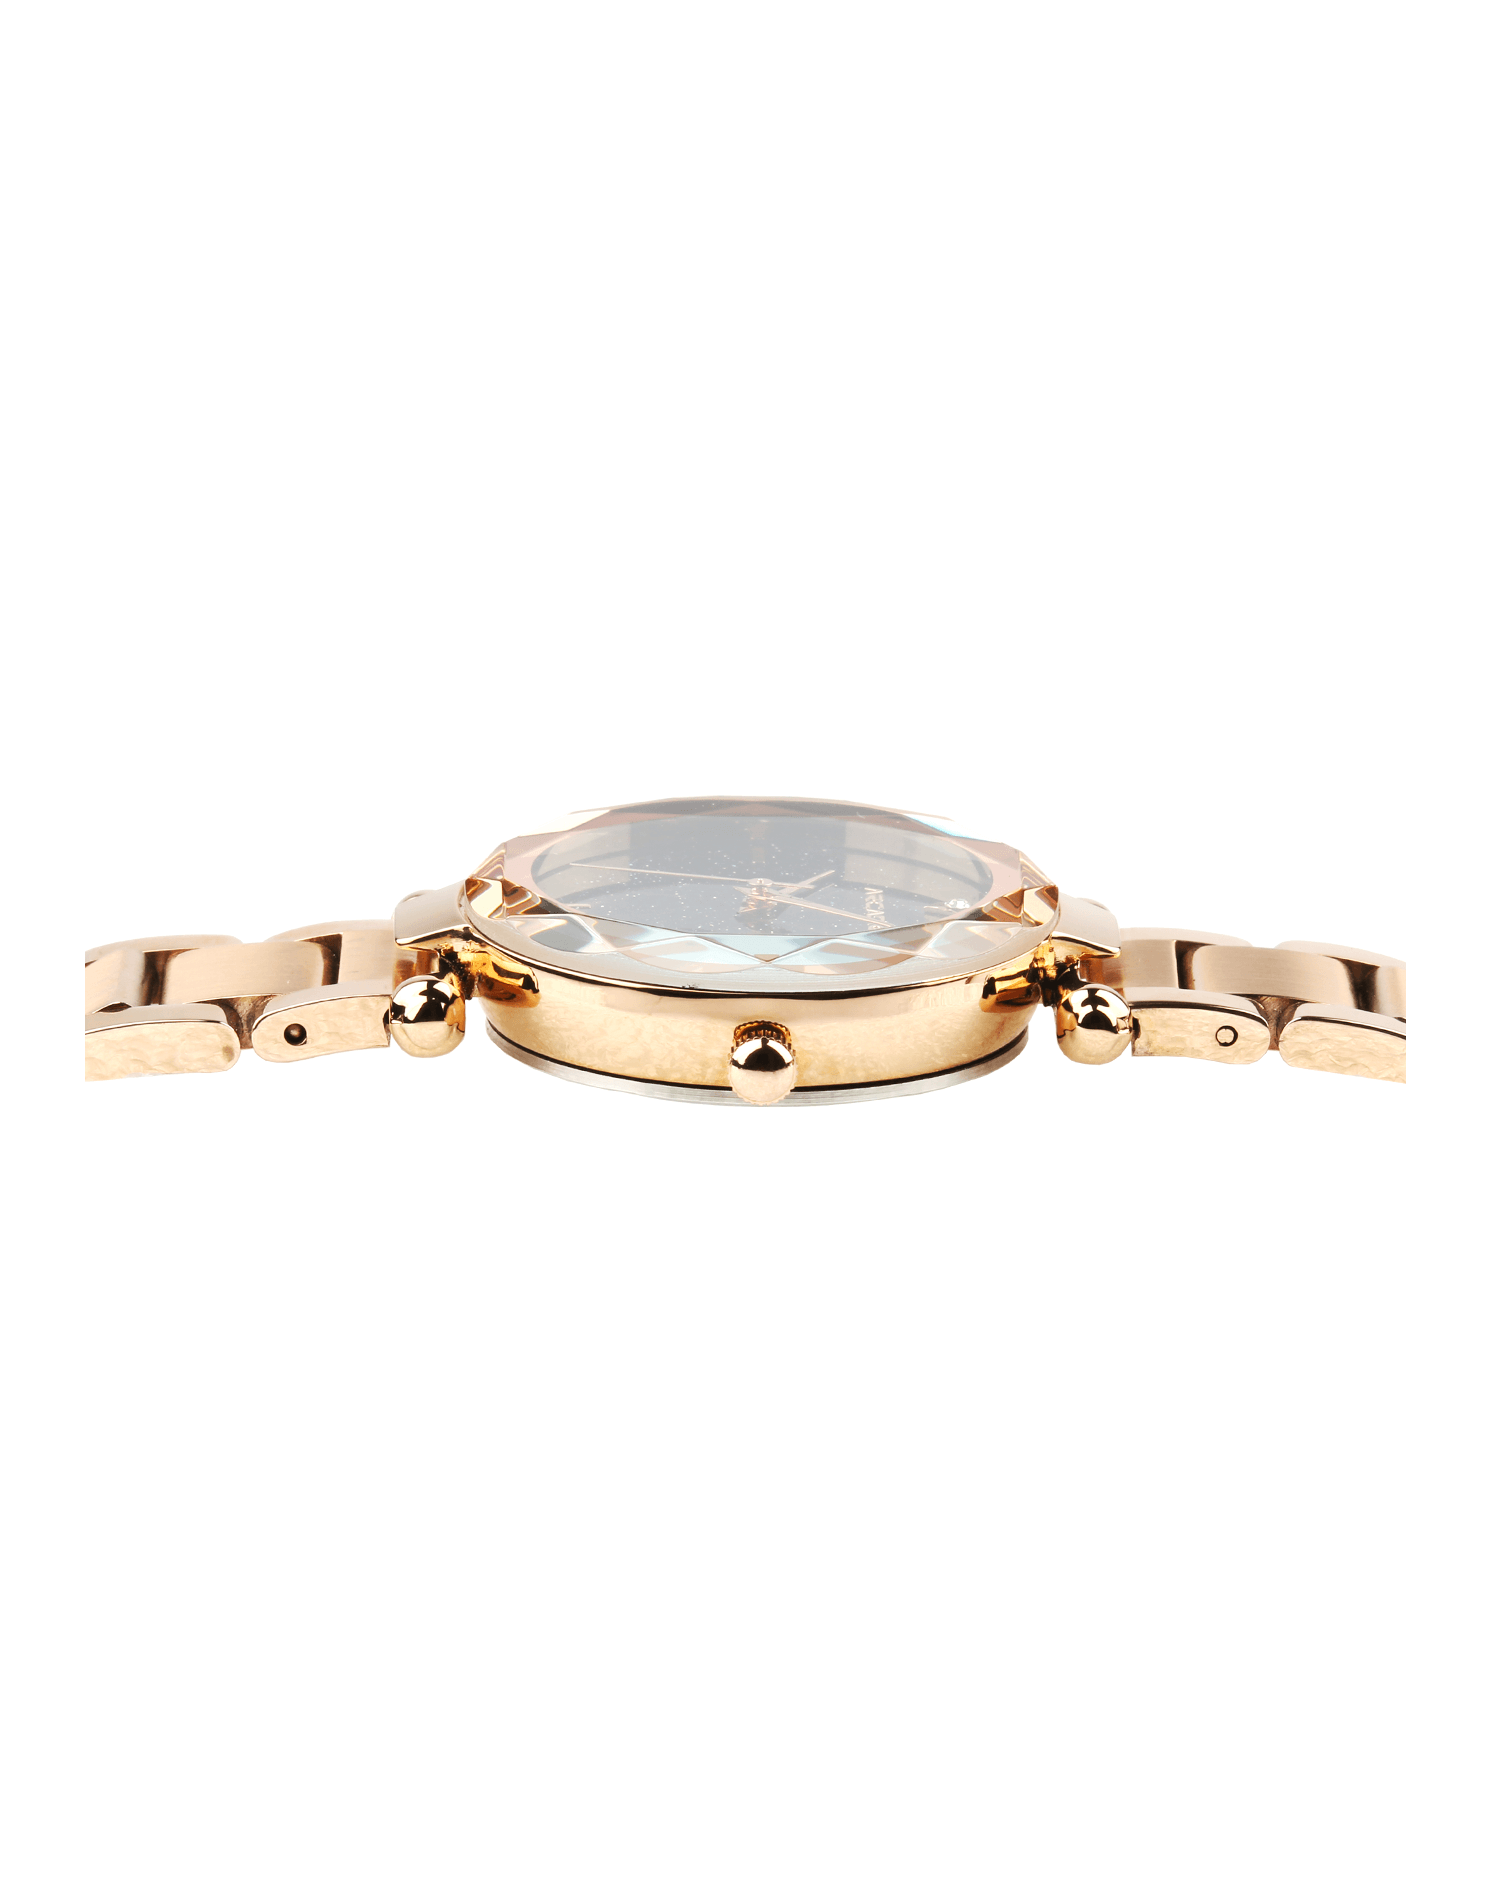 STARGAZE Bracelet Watch - Ravishing Rose Gold - ARSG1001RG ARCADIO